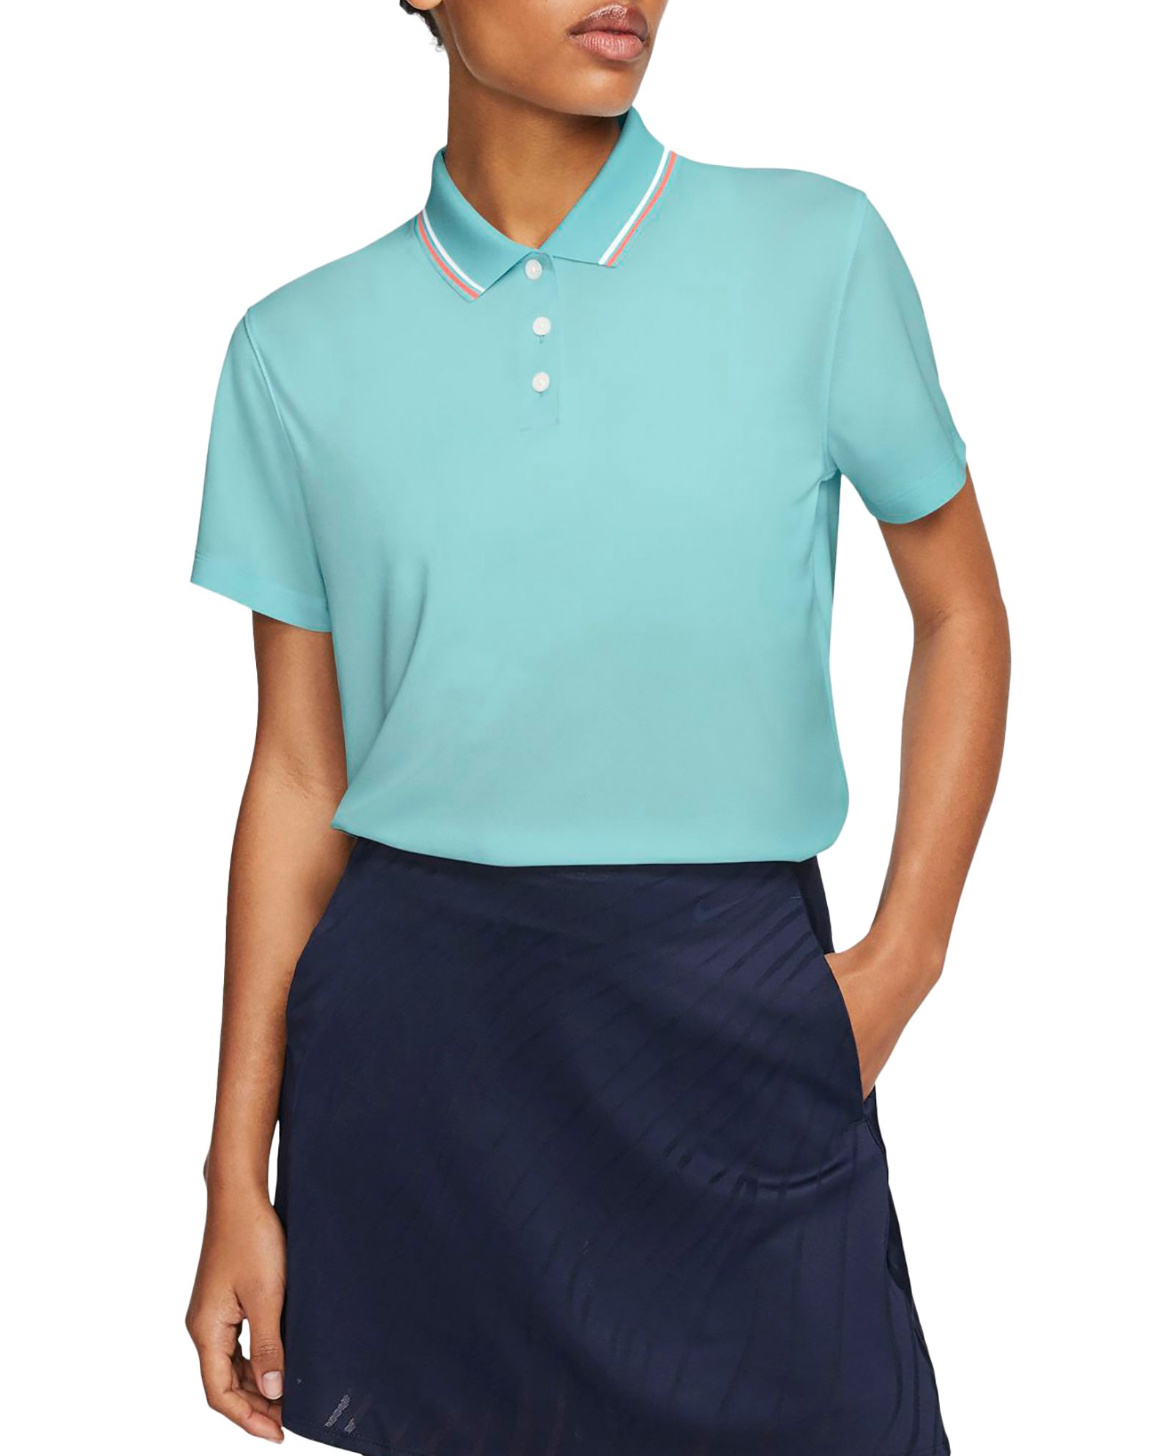 womens-golf-shirts